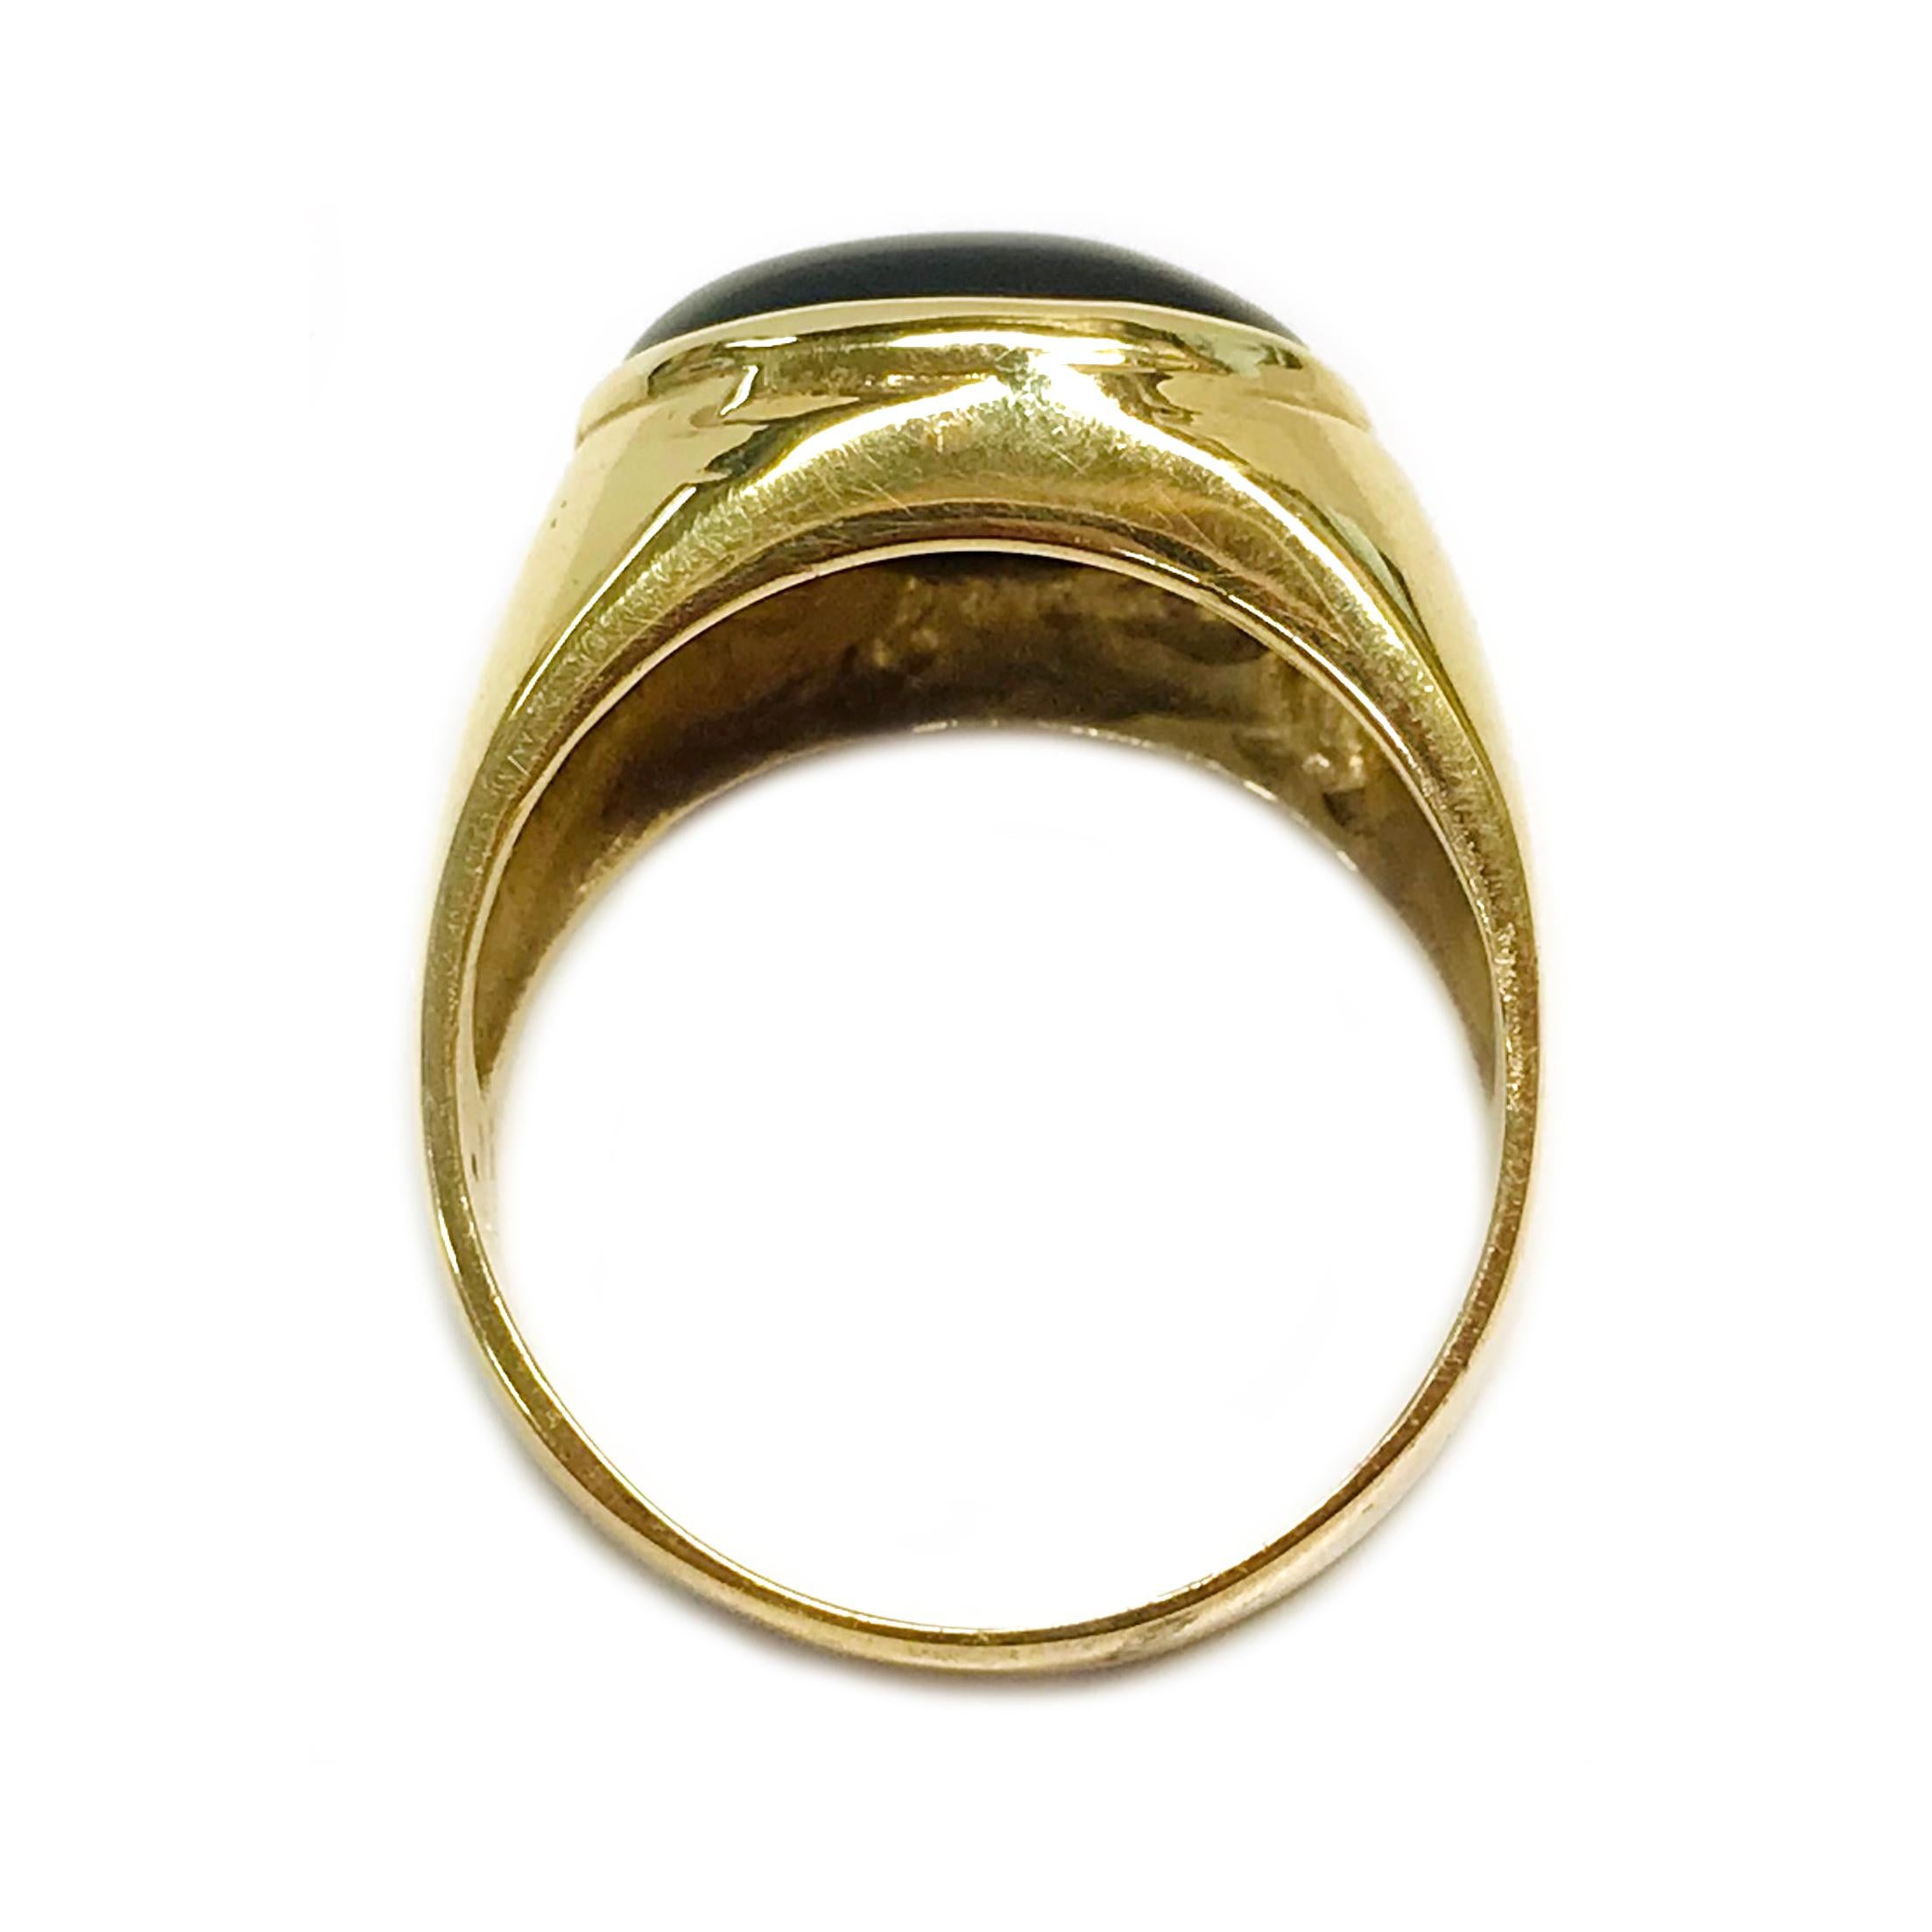 14 karat gold black onyx ring